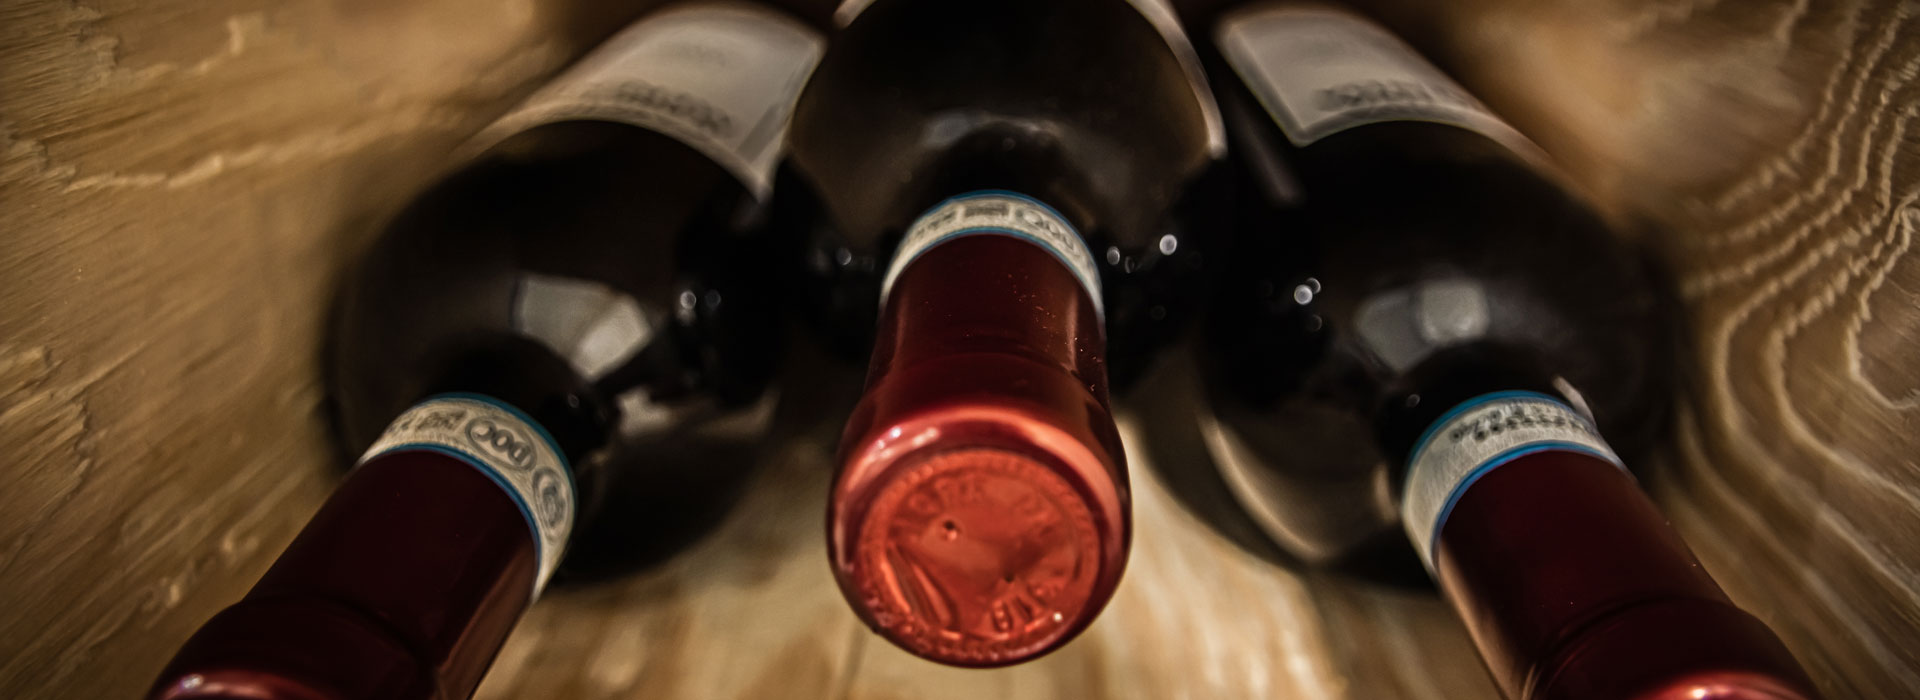 baner Piccolo Piemonte winiarnia rezerwacje